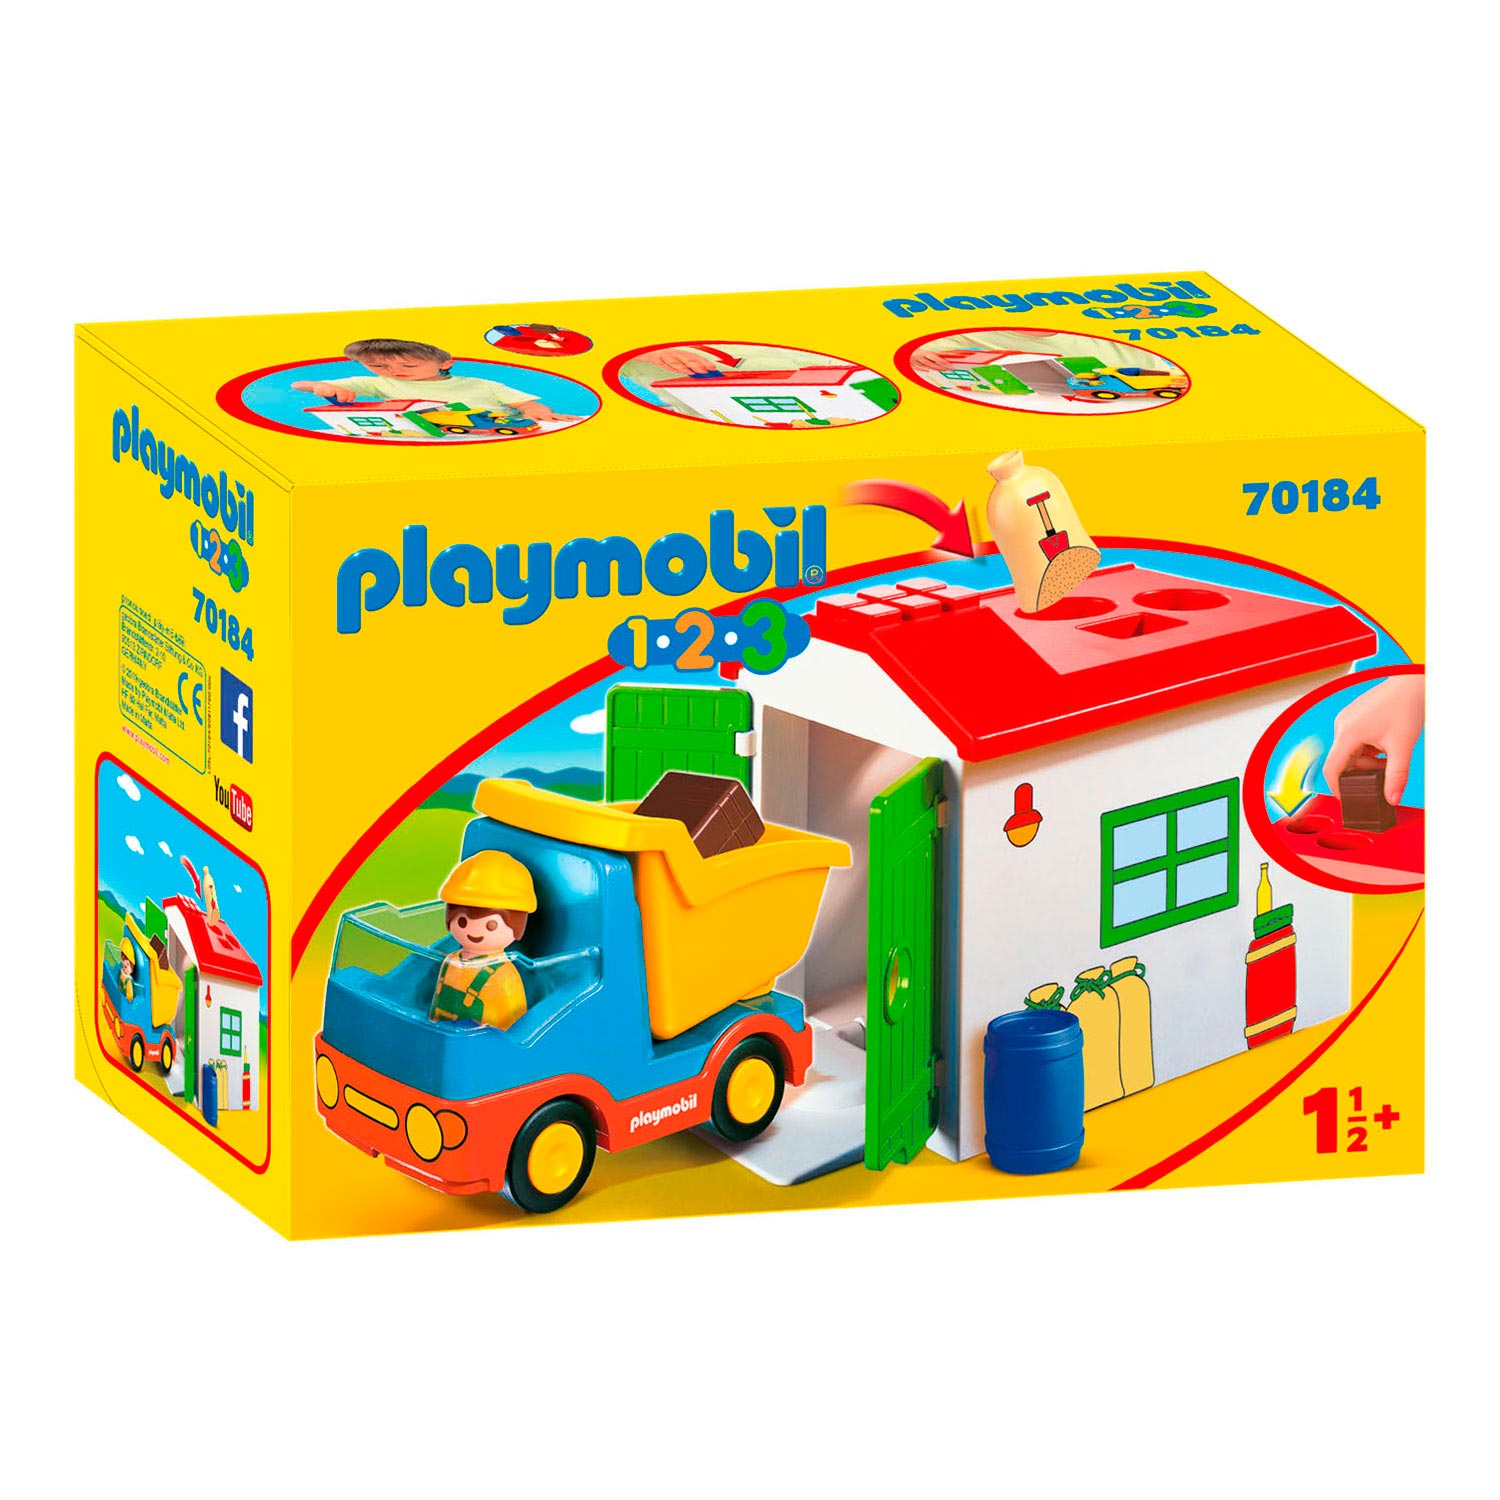 Playmobil 1.2.3, Schulpaket, 65-tlg.